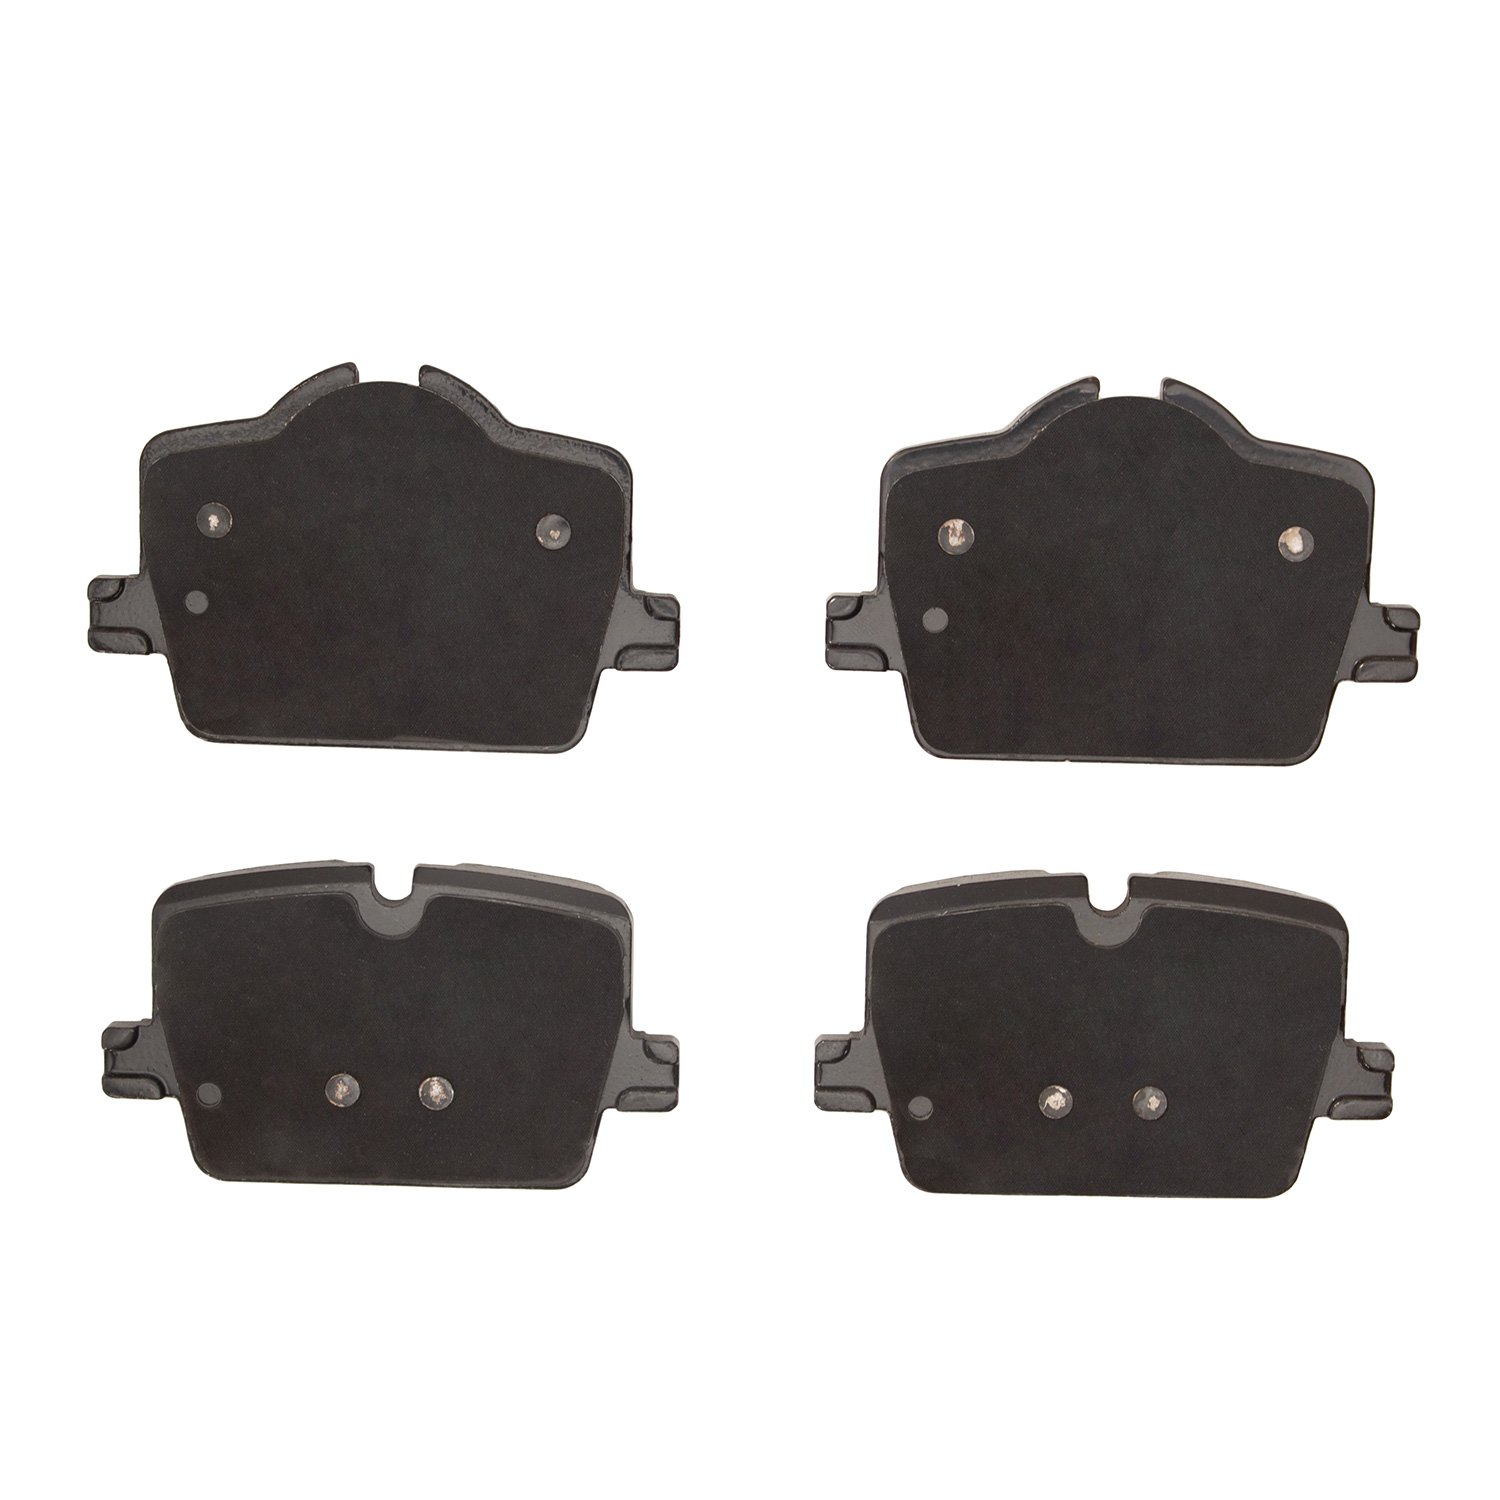 1310-2221-00 3000-Series Ceramic Brake Pads, Fits Select Multiple Makes/Models, Position: Rear